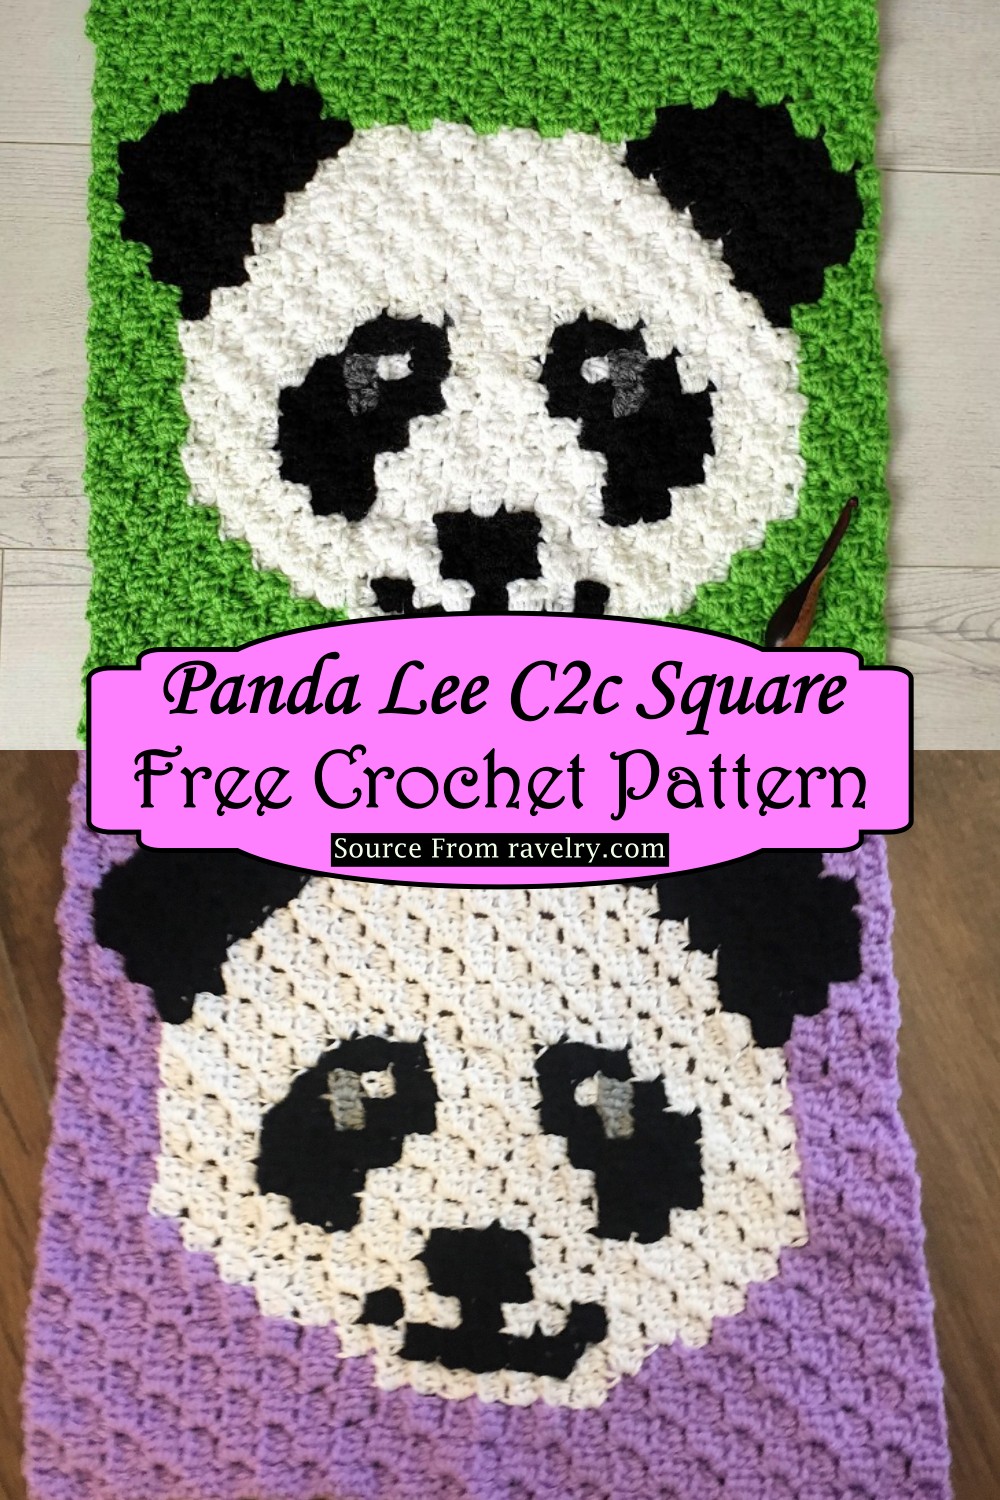 Crochet Panda Lee C2c Square Pattern